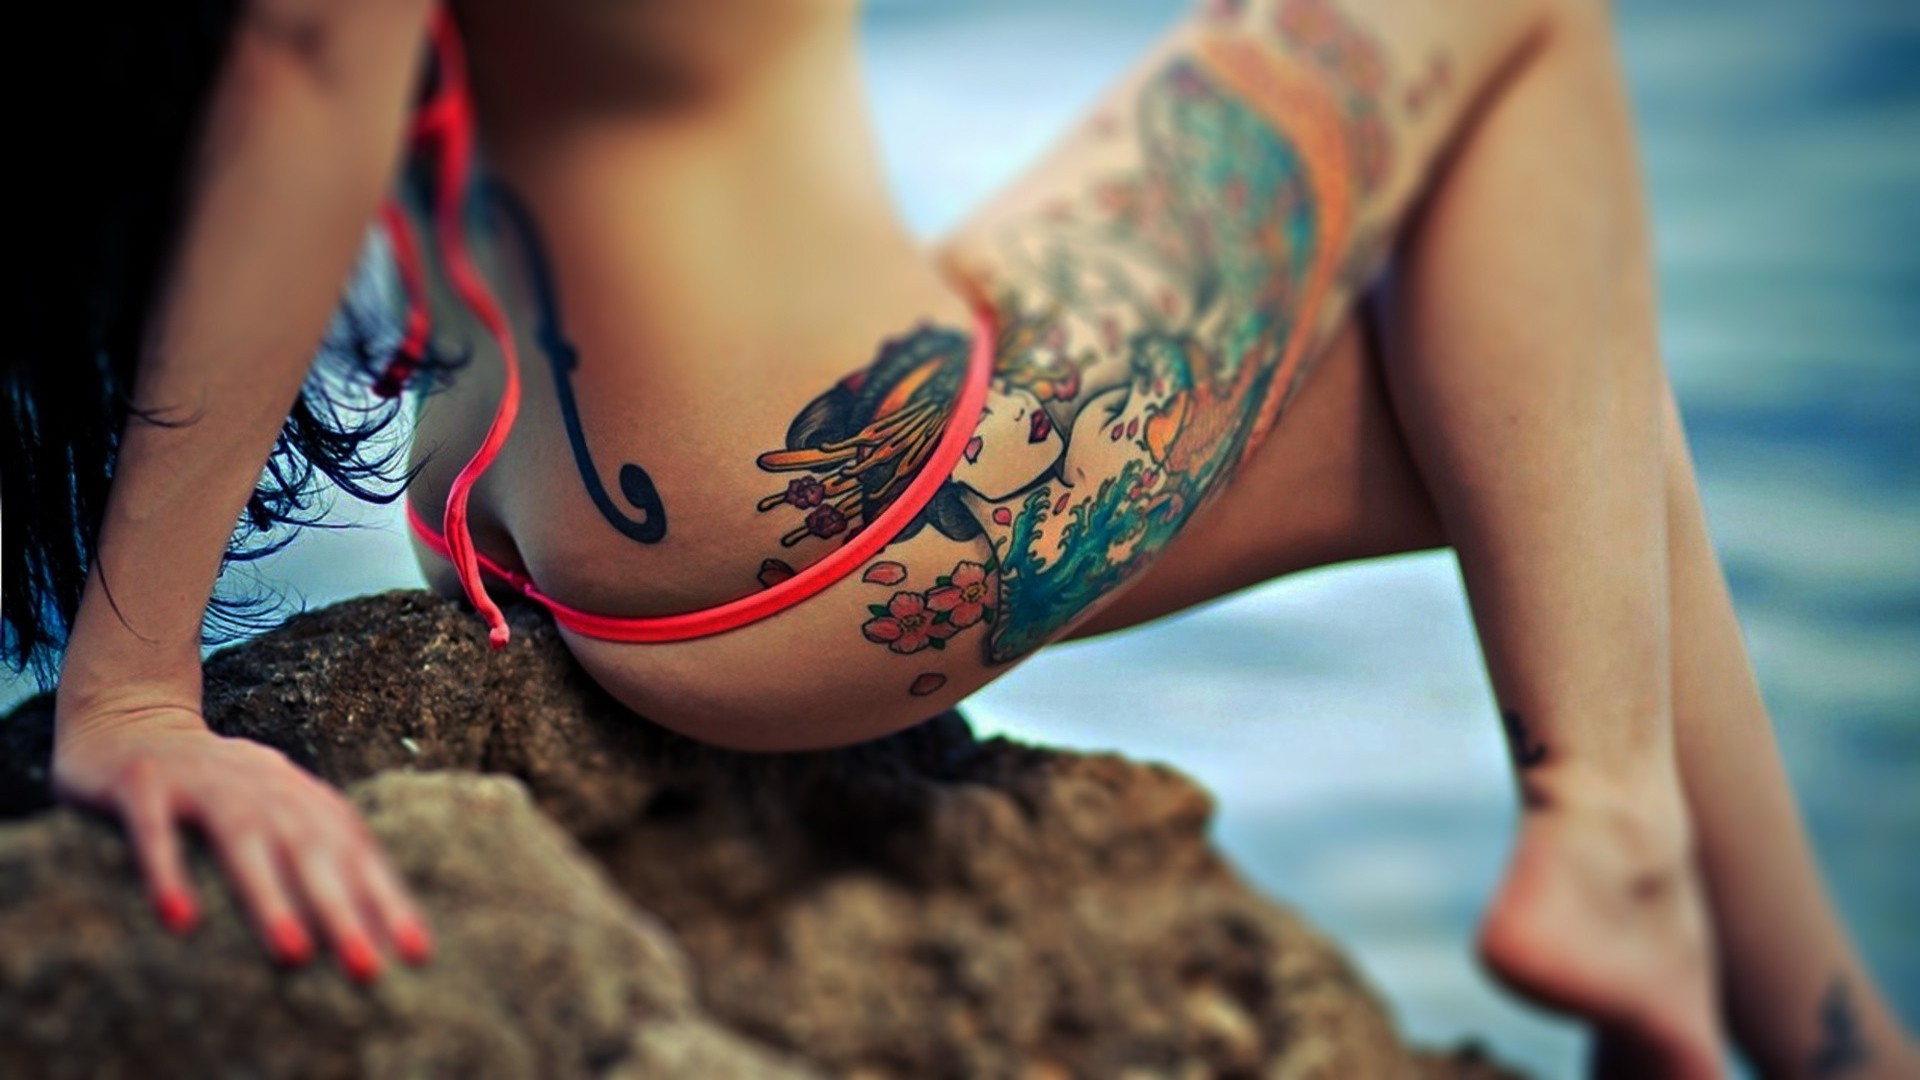 Hot-Tattoo-Girl-Designs-HD-Wallpaper